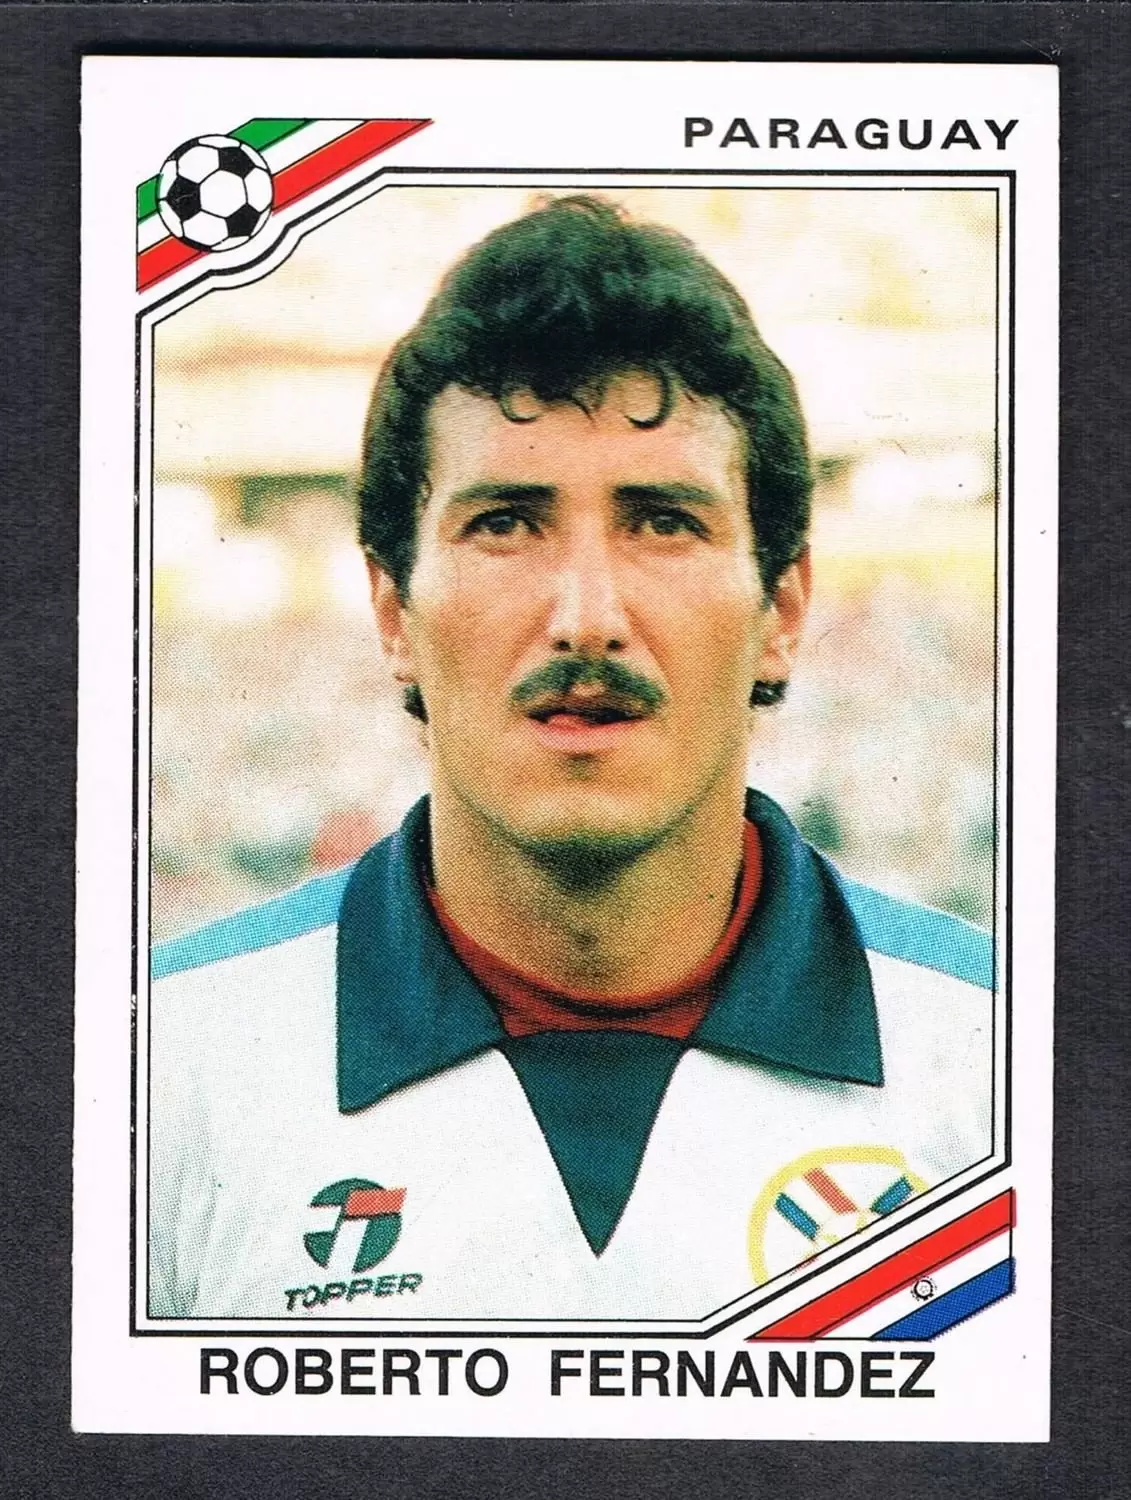 Mexico 86 World Cup - Roberto Fernandez  - Paraguay